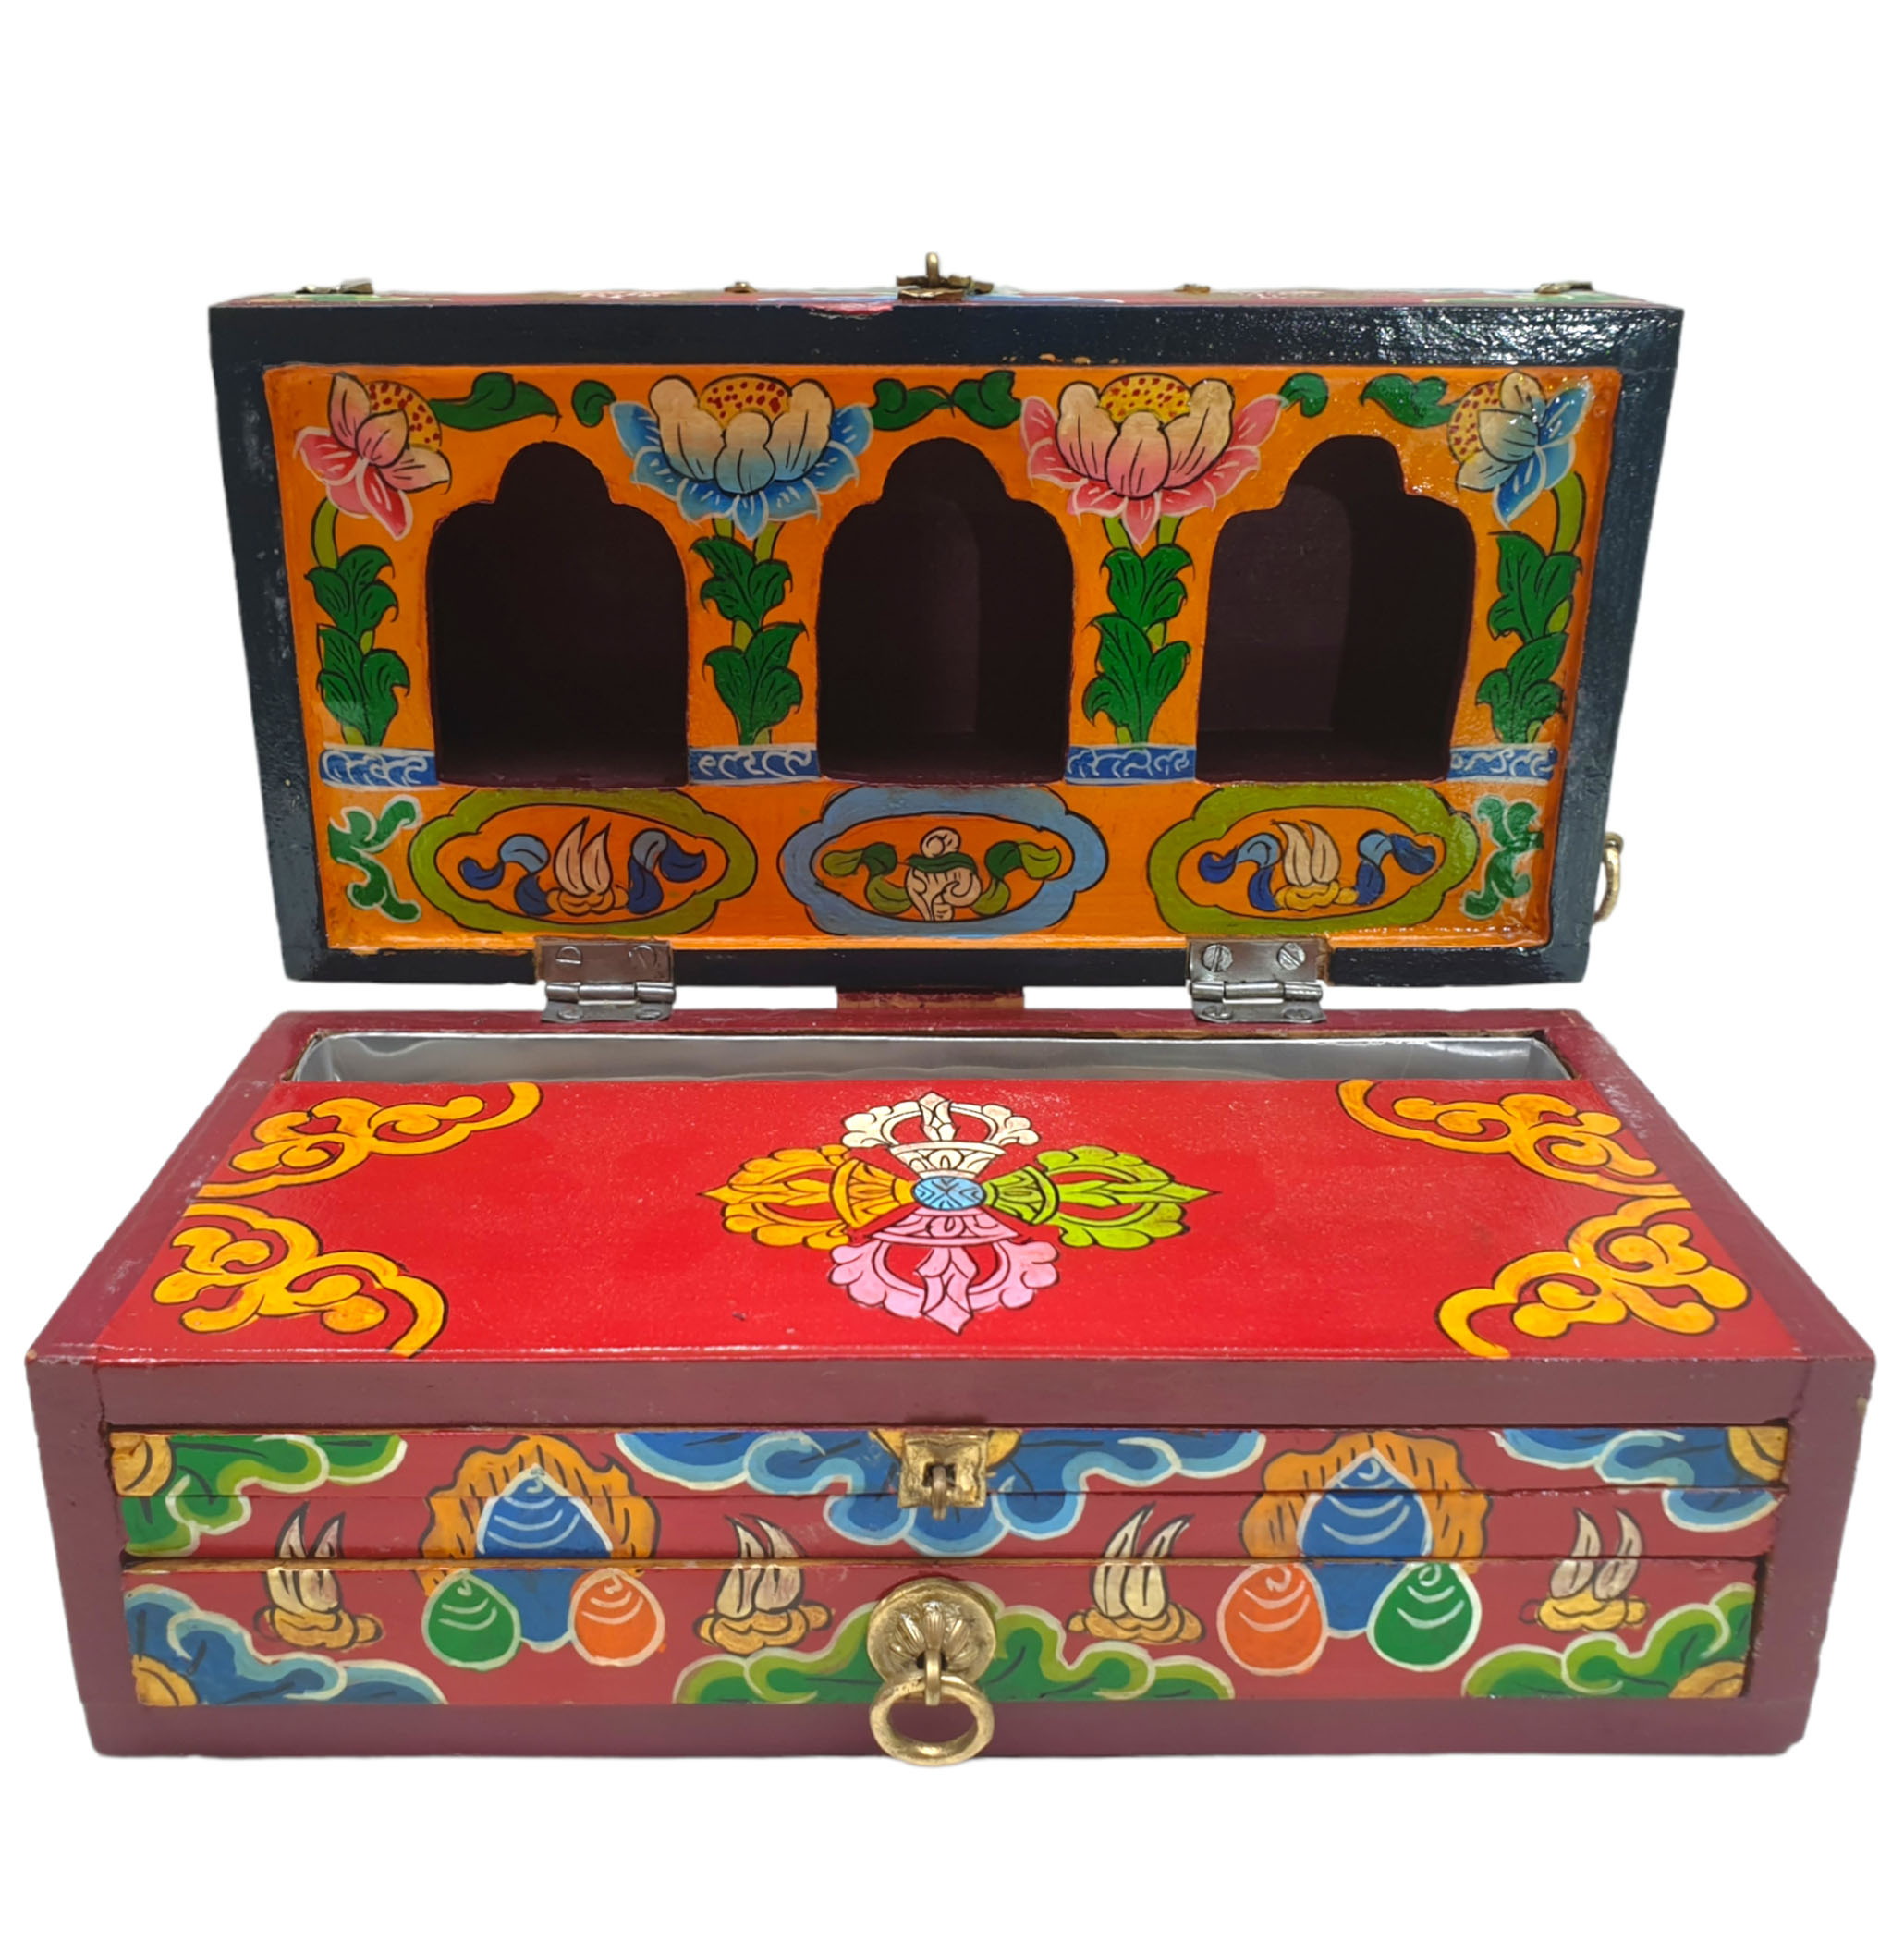 Buddhist Handmade Wooden Traveling Altar chesum Box, foldable, With Pancha Buddha